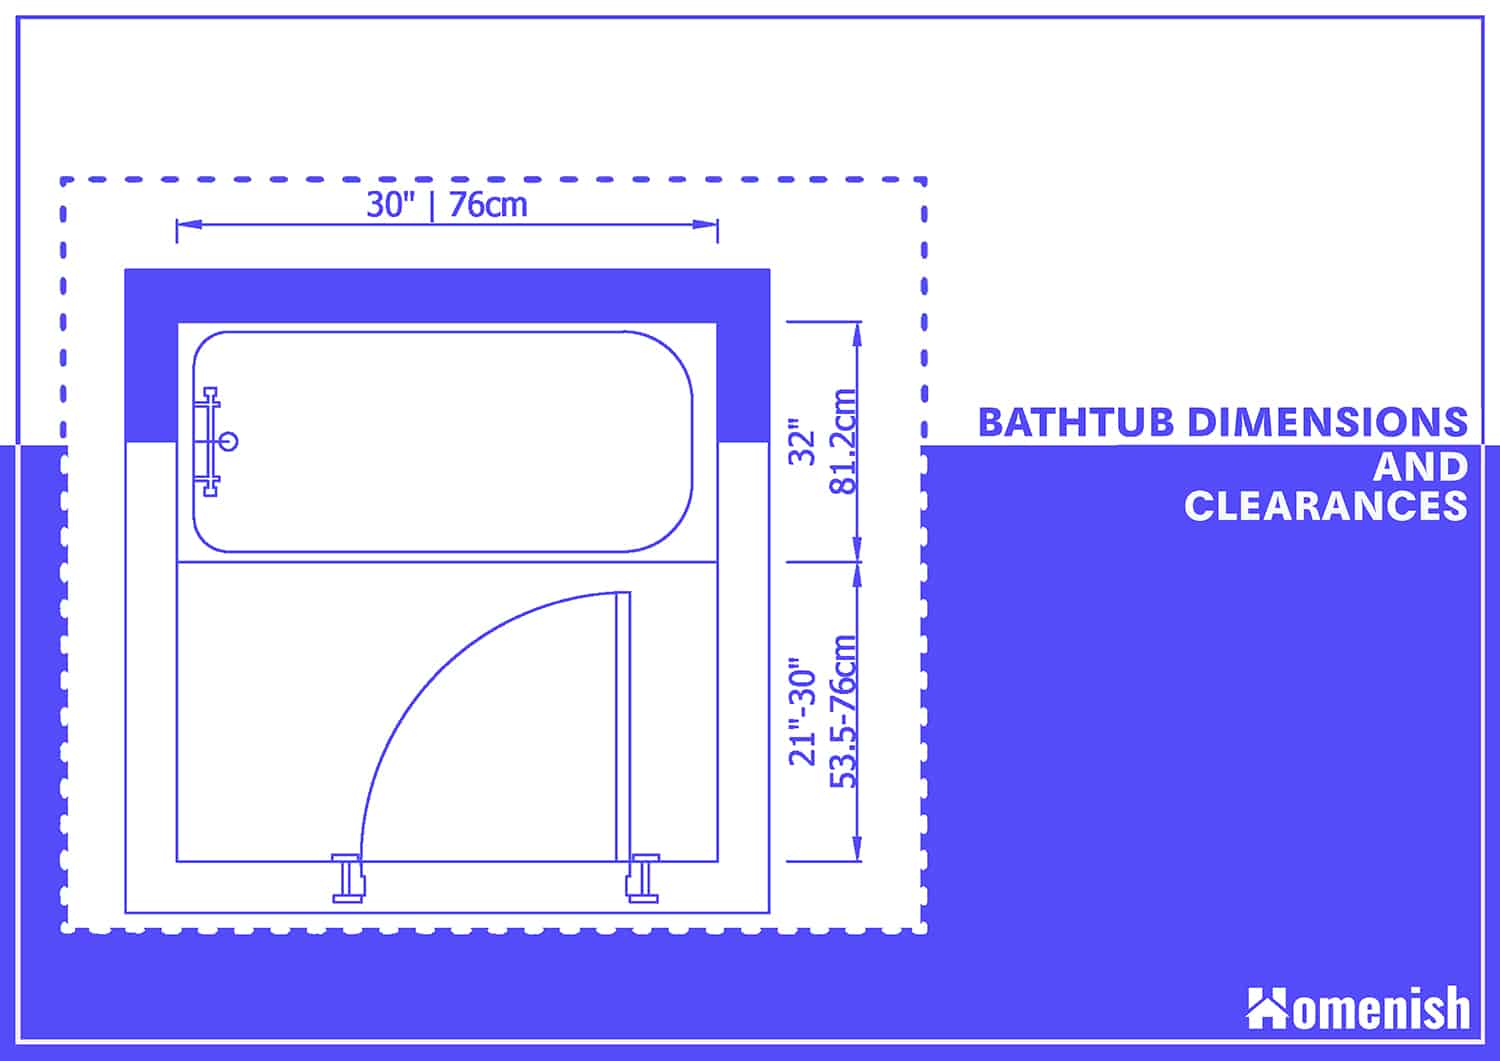 Standard BathTub Dimensions & Clearances